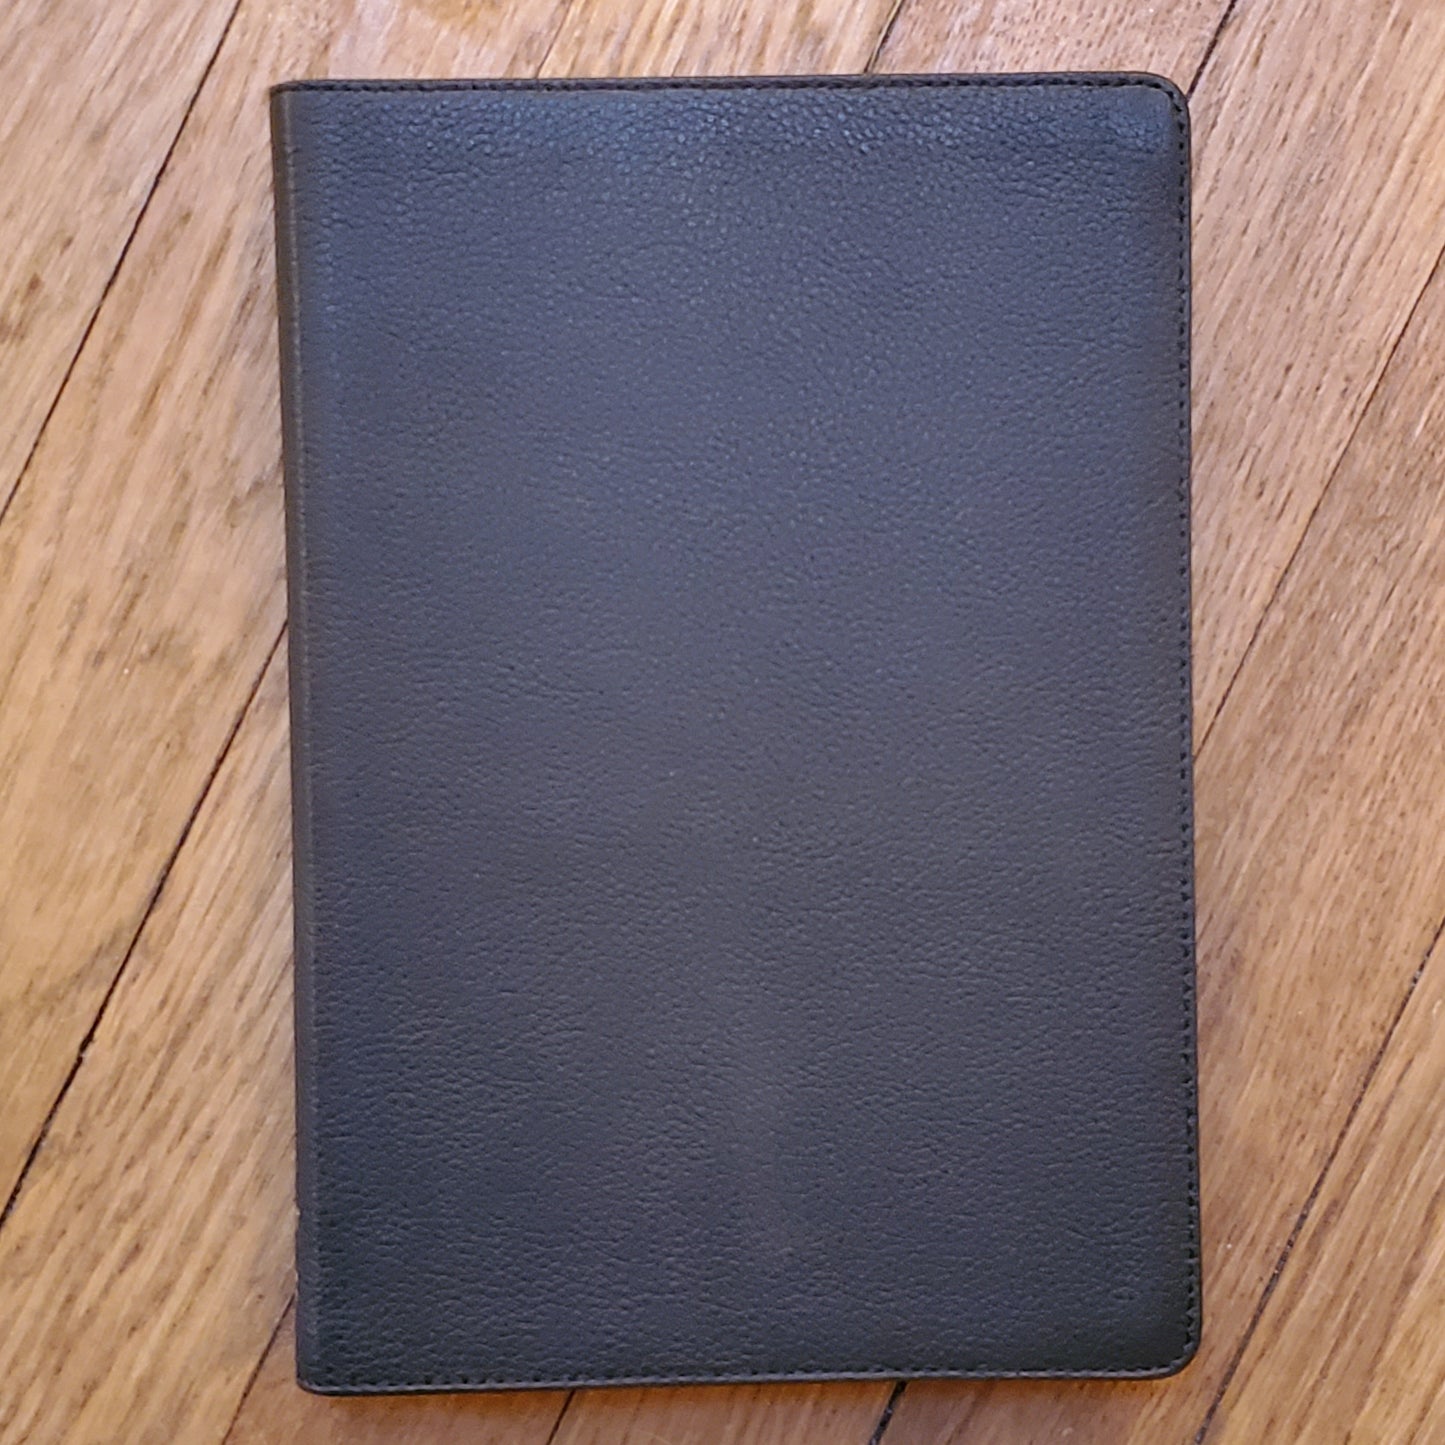 GB NET Bible Large Print Thinline Genuine Leather, Black